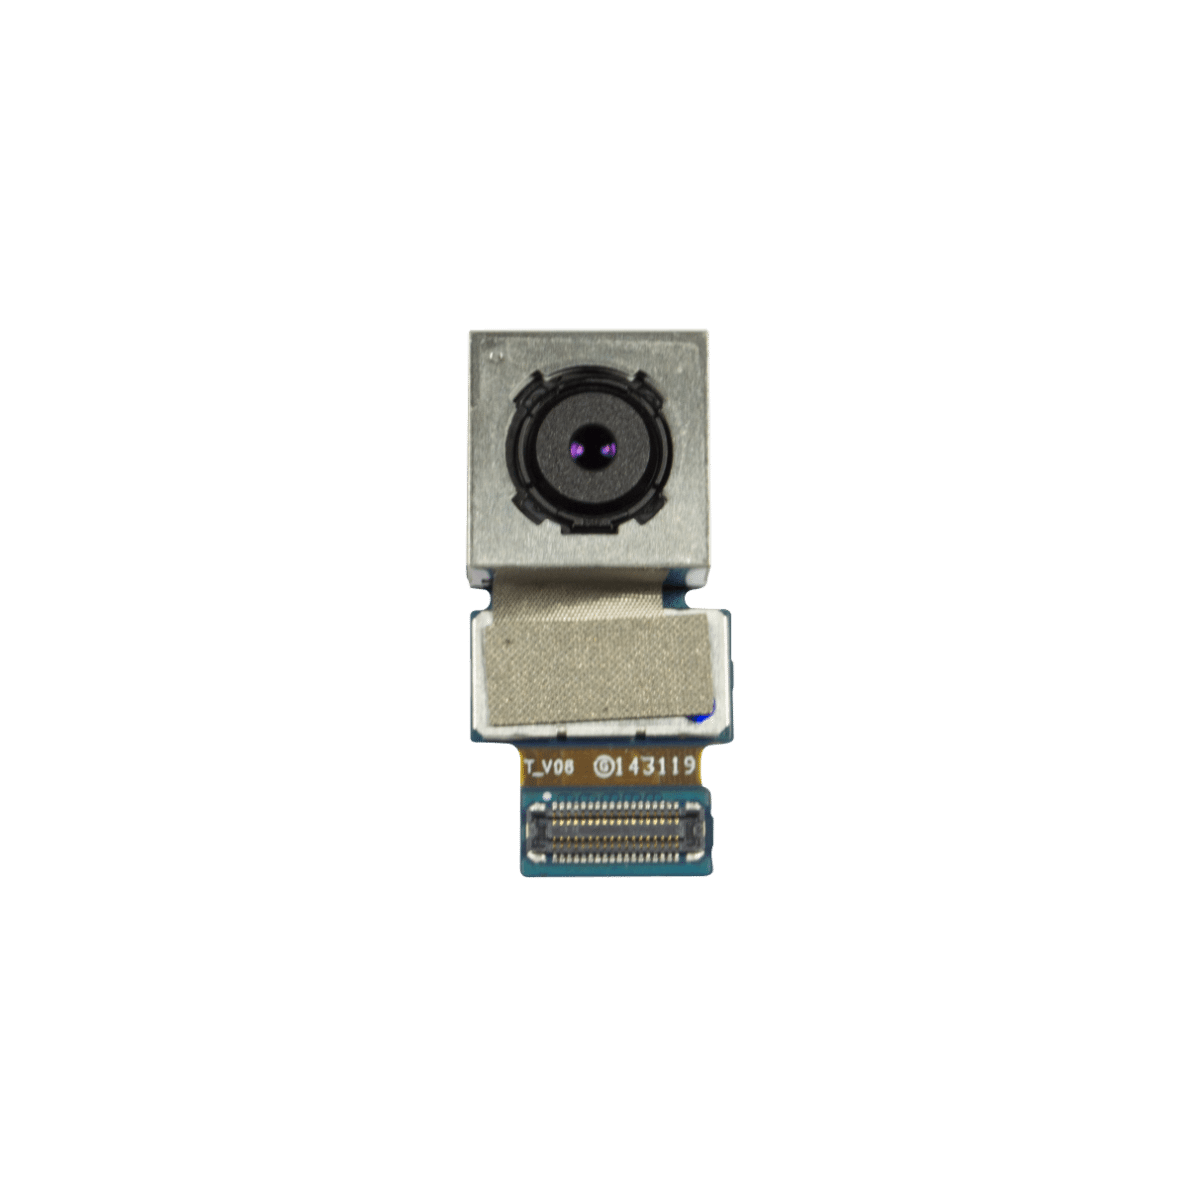 Samsung Galaxy Note 4 Rear-Facing Camera Replacement